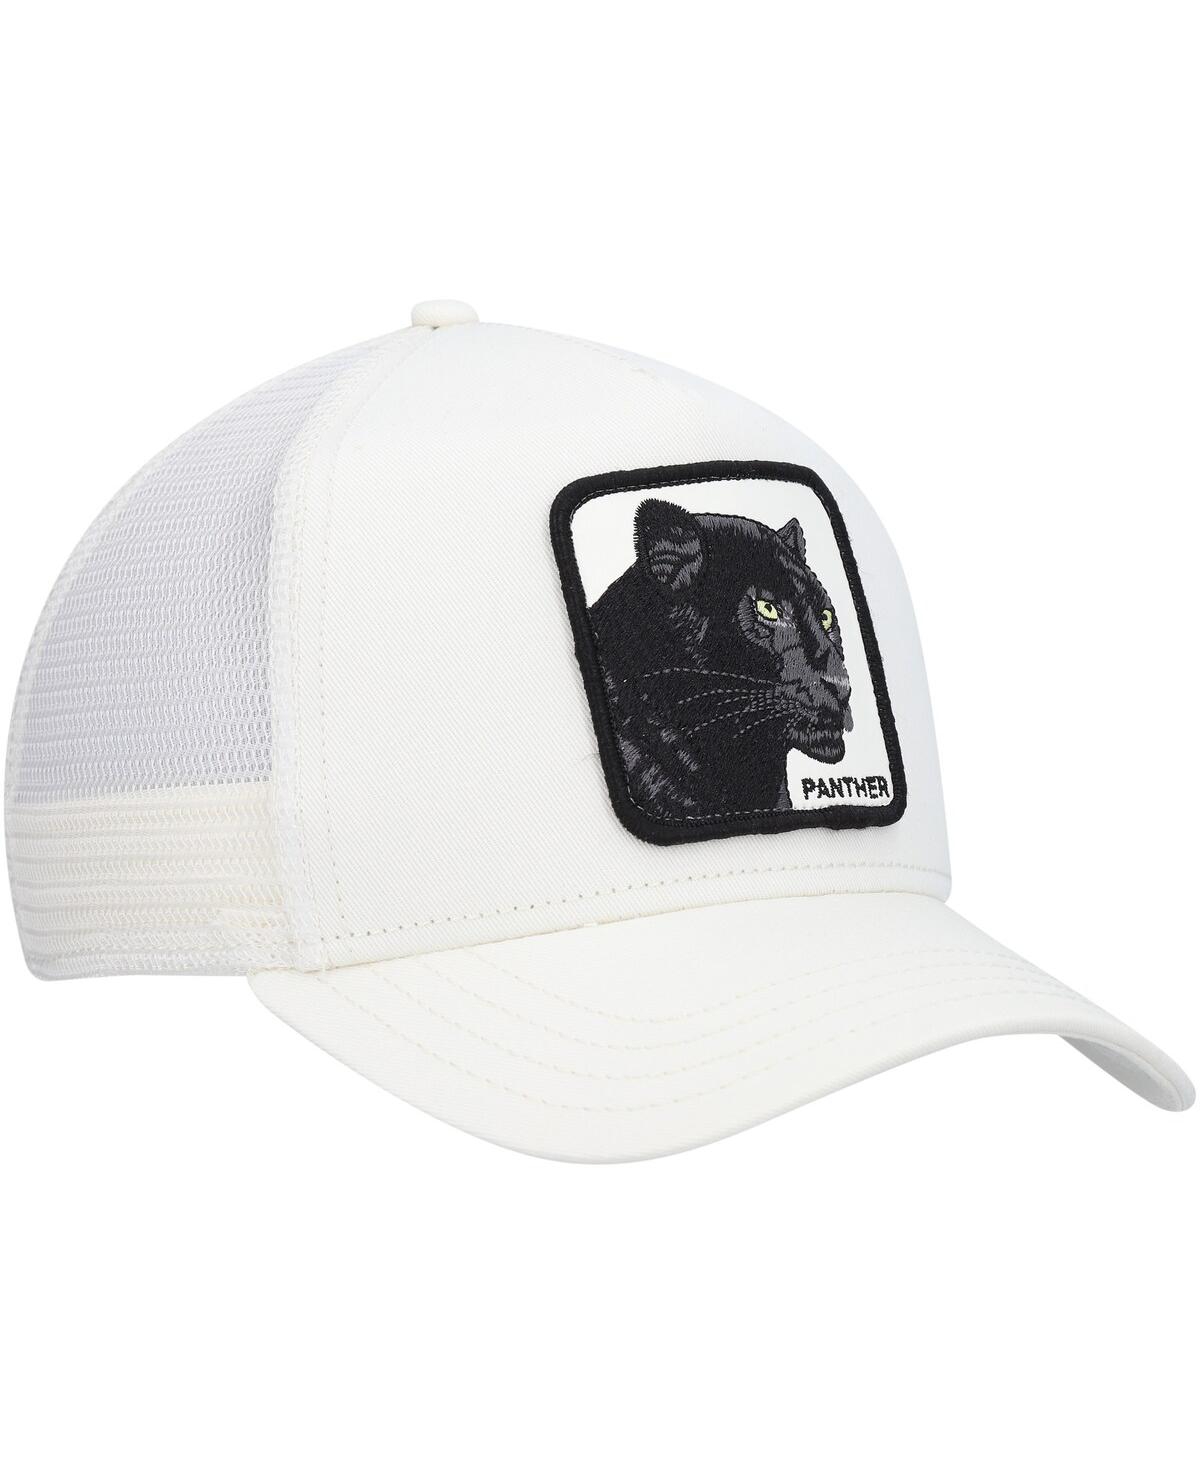 Shop Goorin Bros Men's . White The Panther Trucker Adjustable Hat